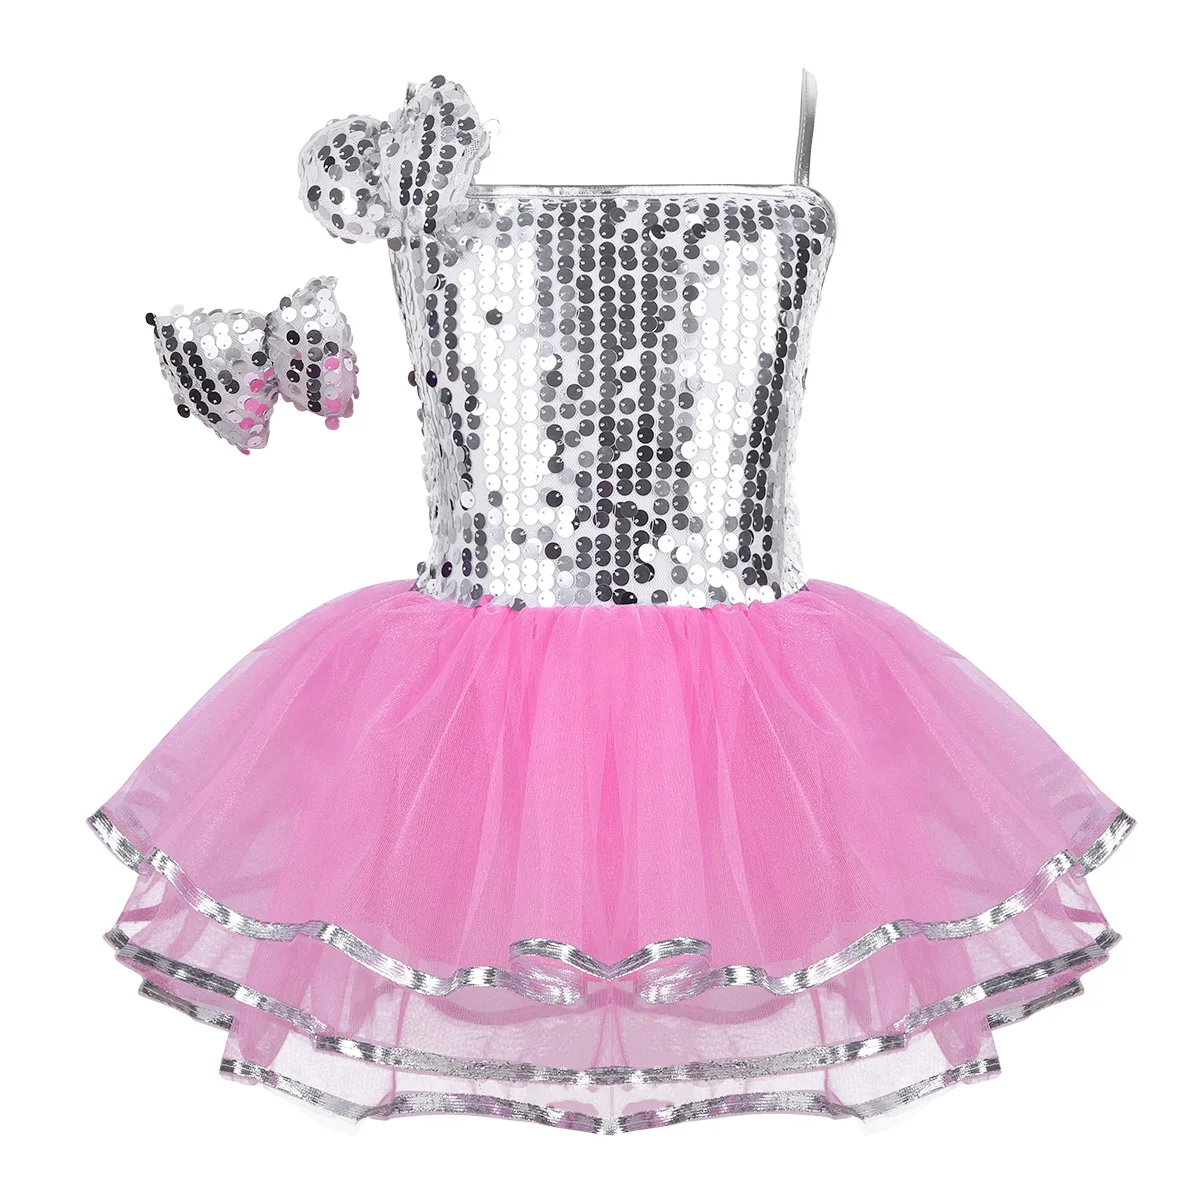 

Kids Girls Ballet Dancewear Outfit Shiny Sequins Mesh Tutu Dress+Hairclip Set for Modern Contemporary Jazz Latin Dance Clothes